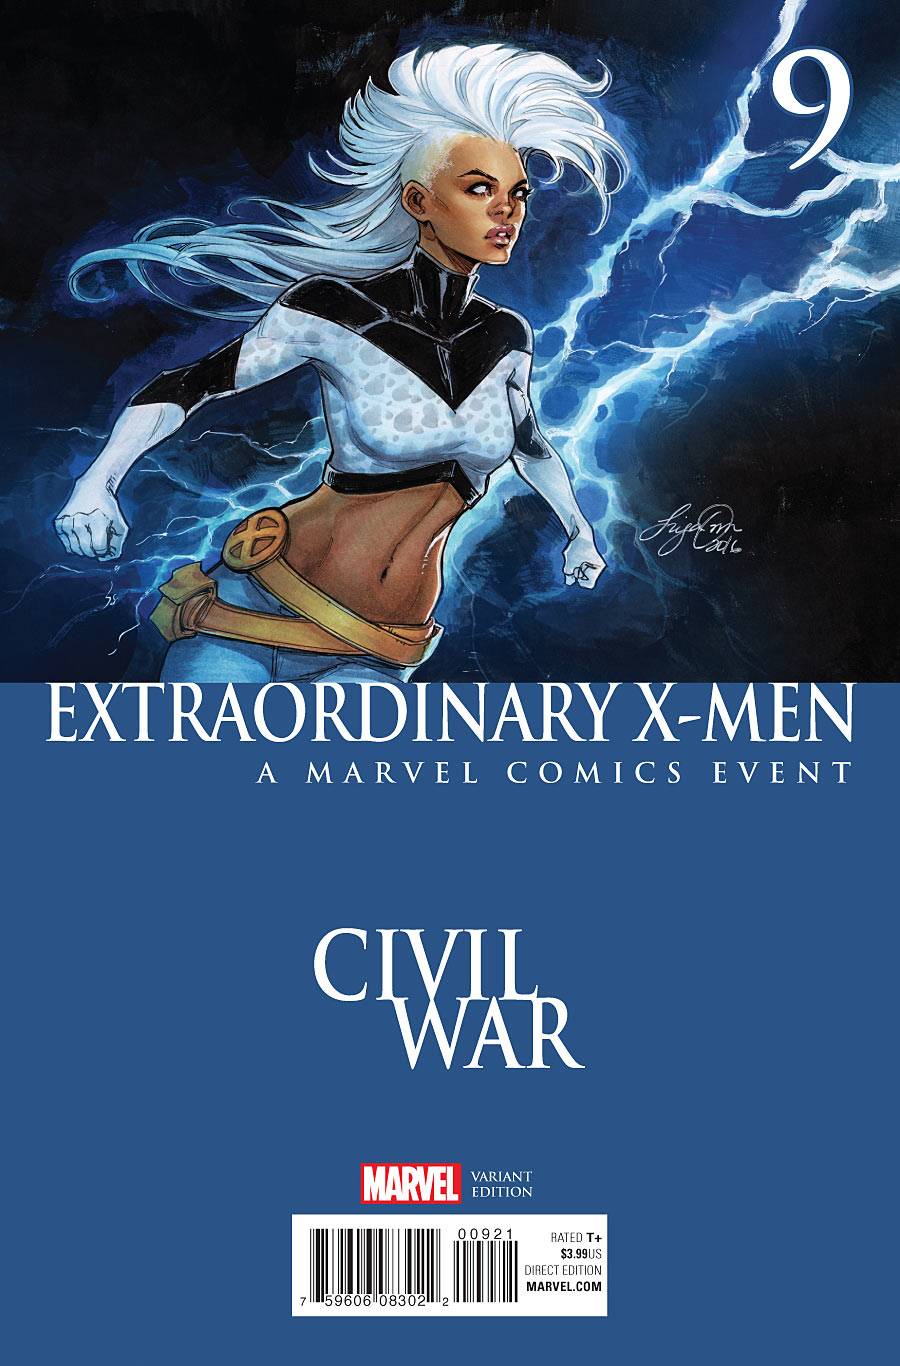 Extraordinary X-Men #9 Civil War Variant